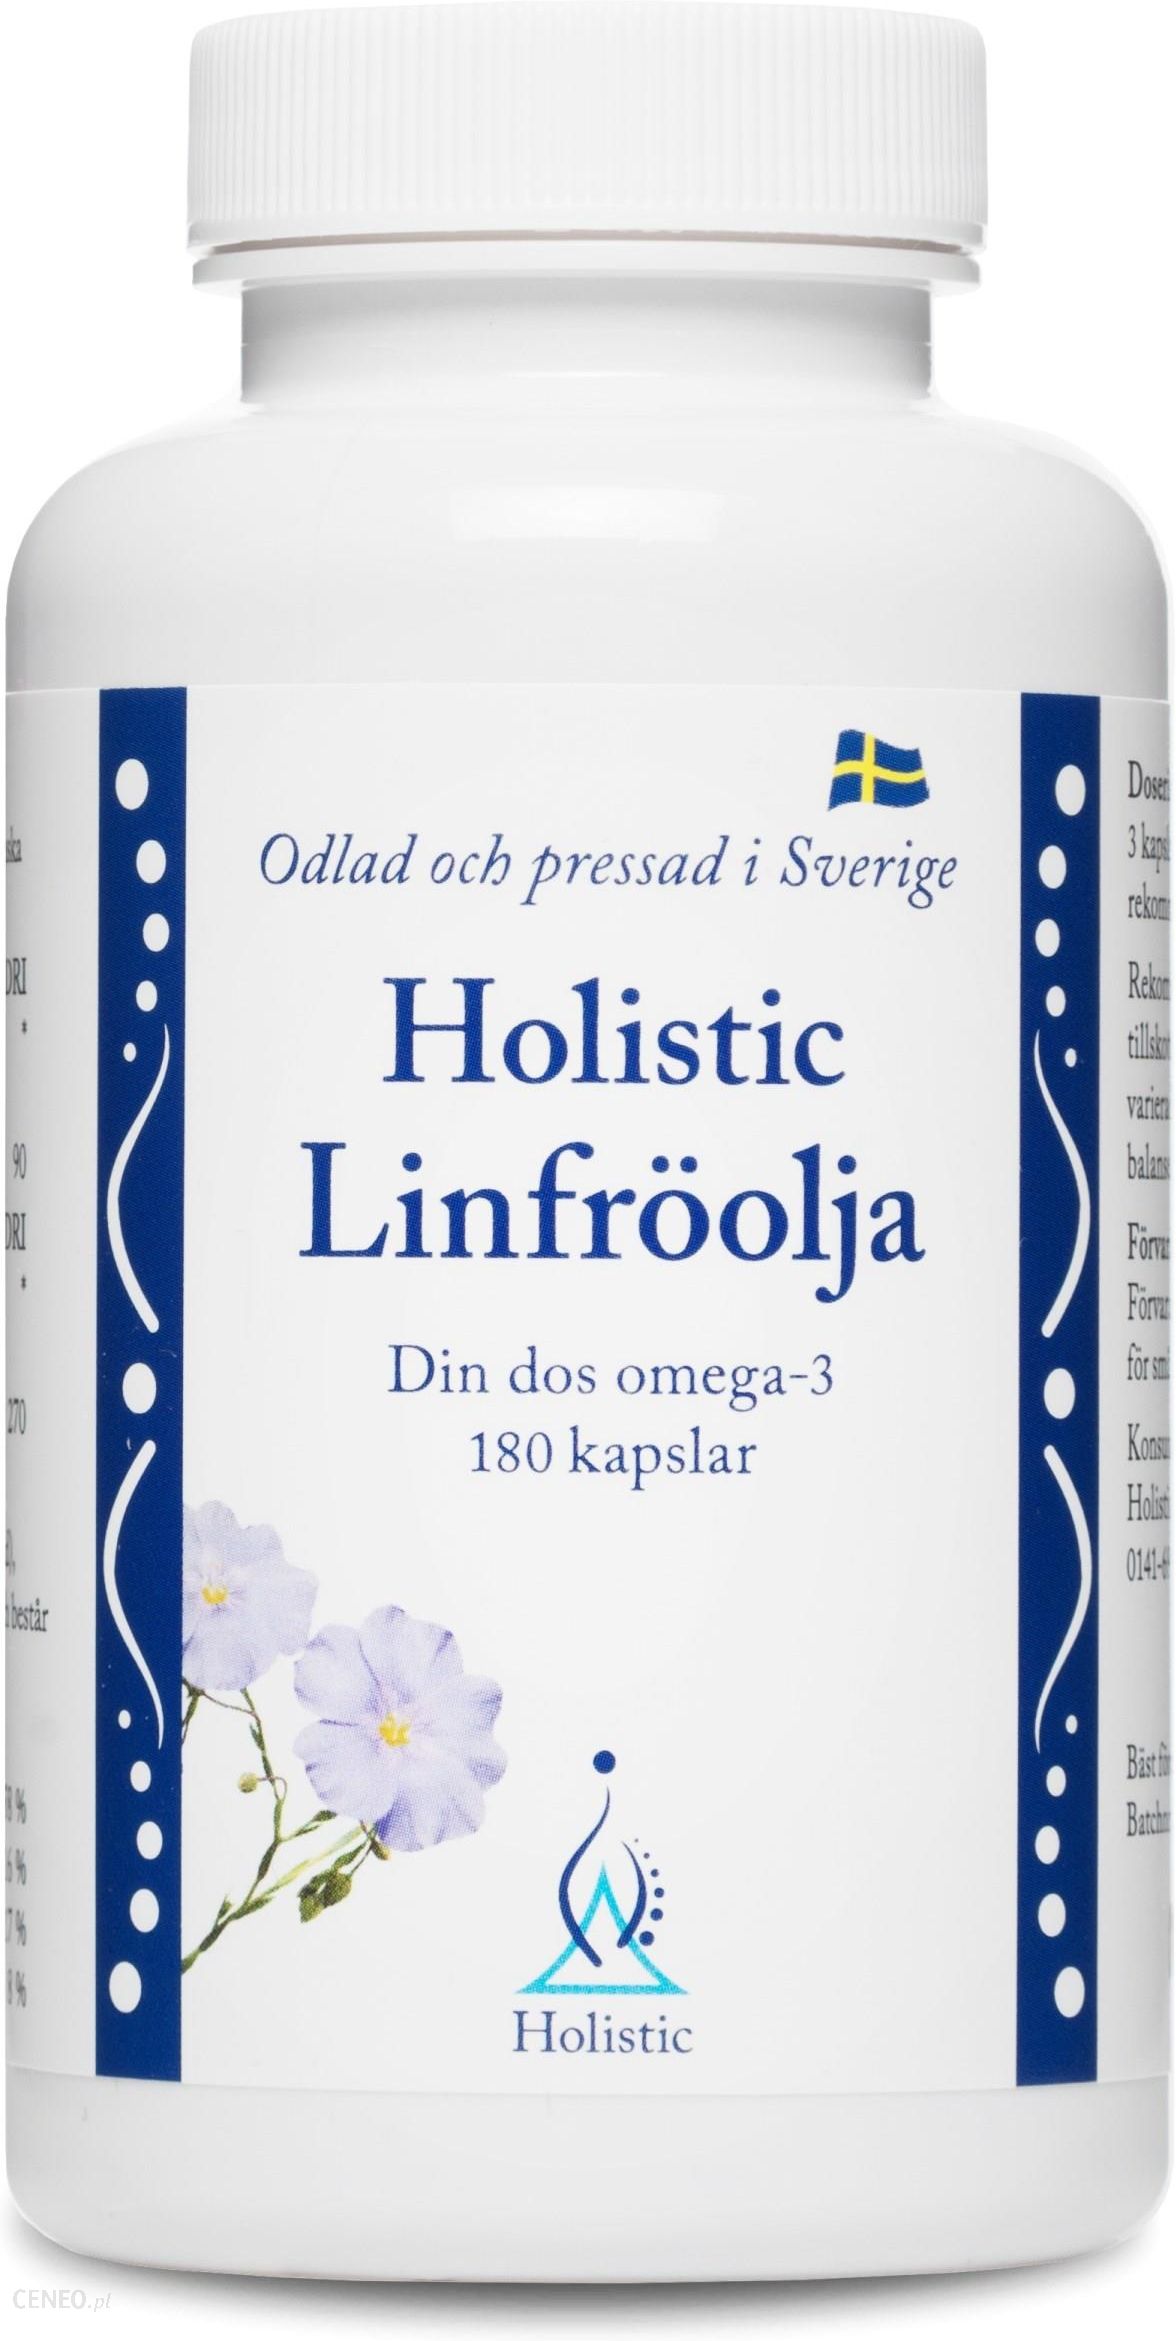 Holistic Linfroolja olej lniany + witamina E 180 kaps.